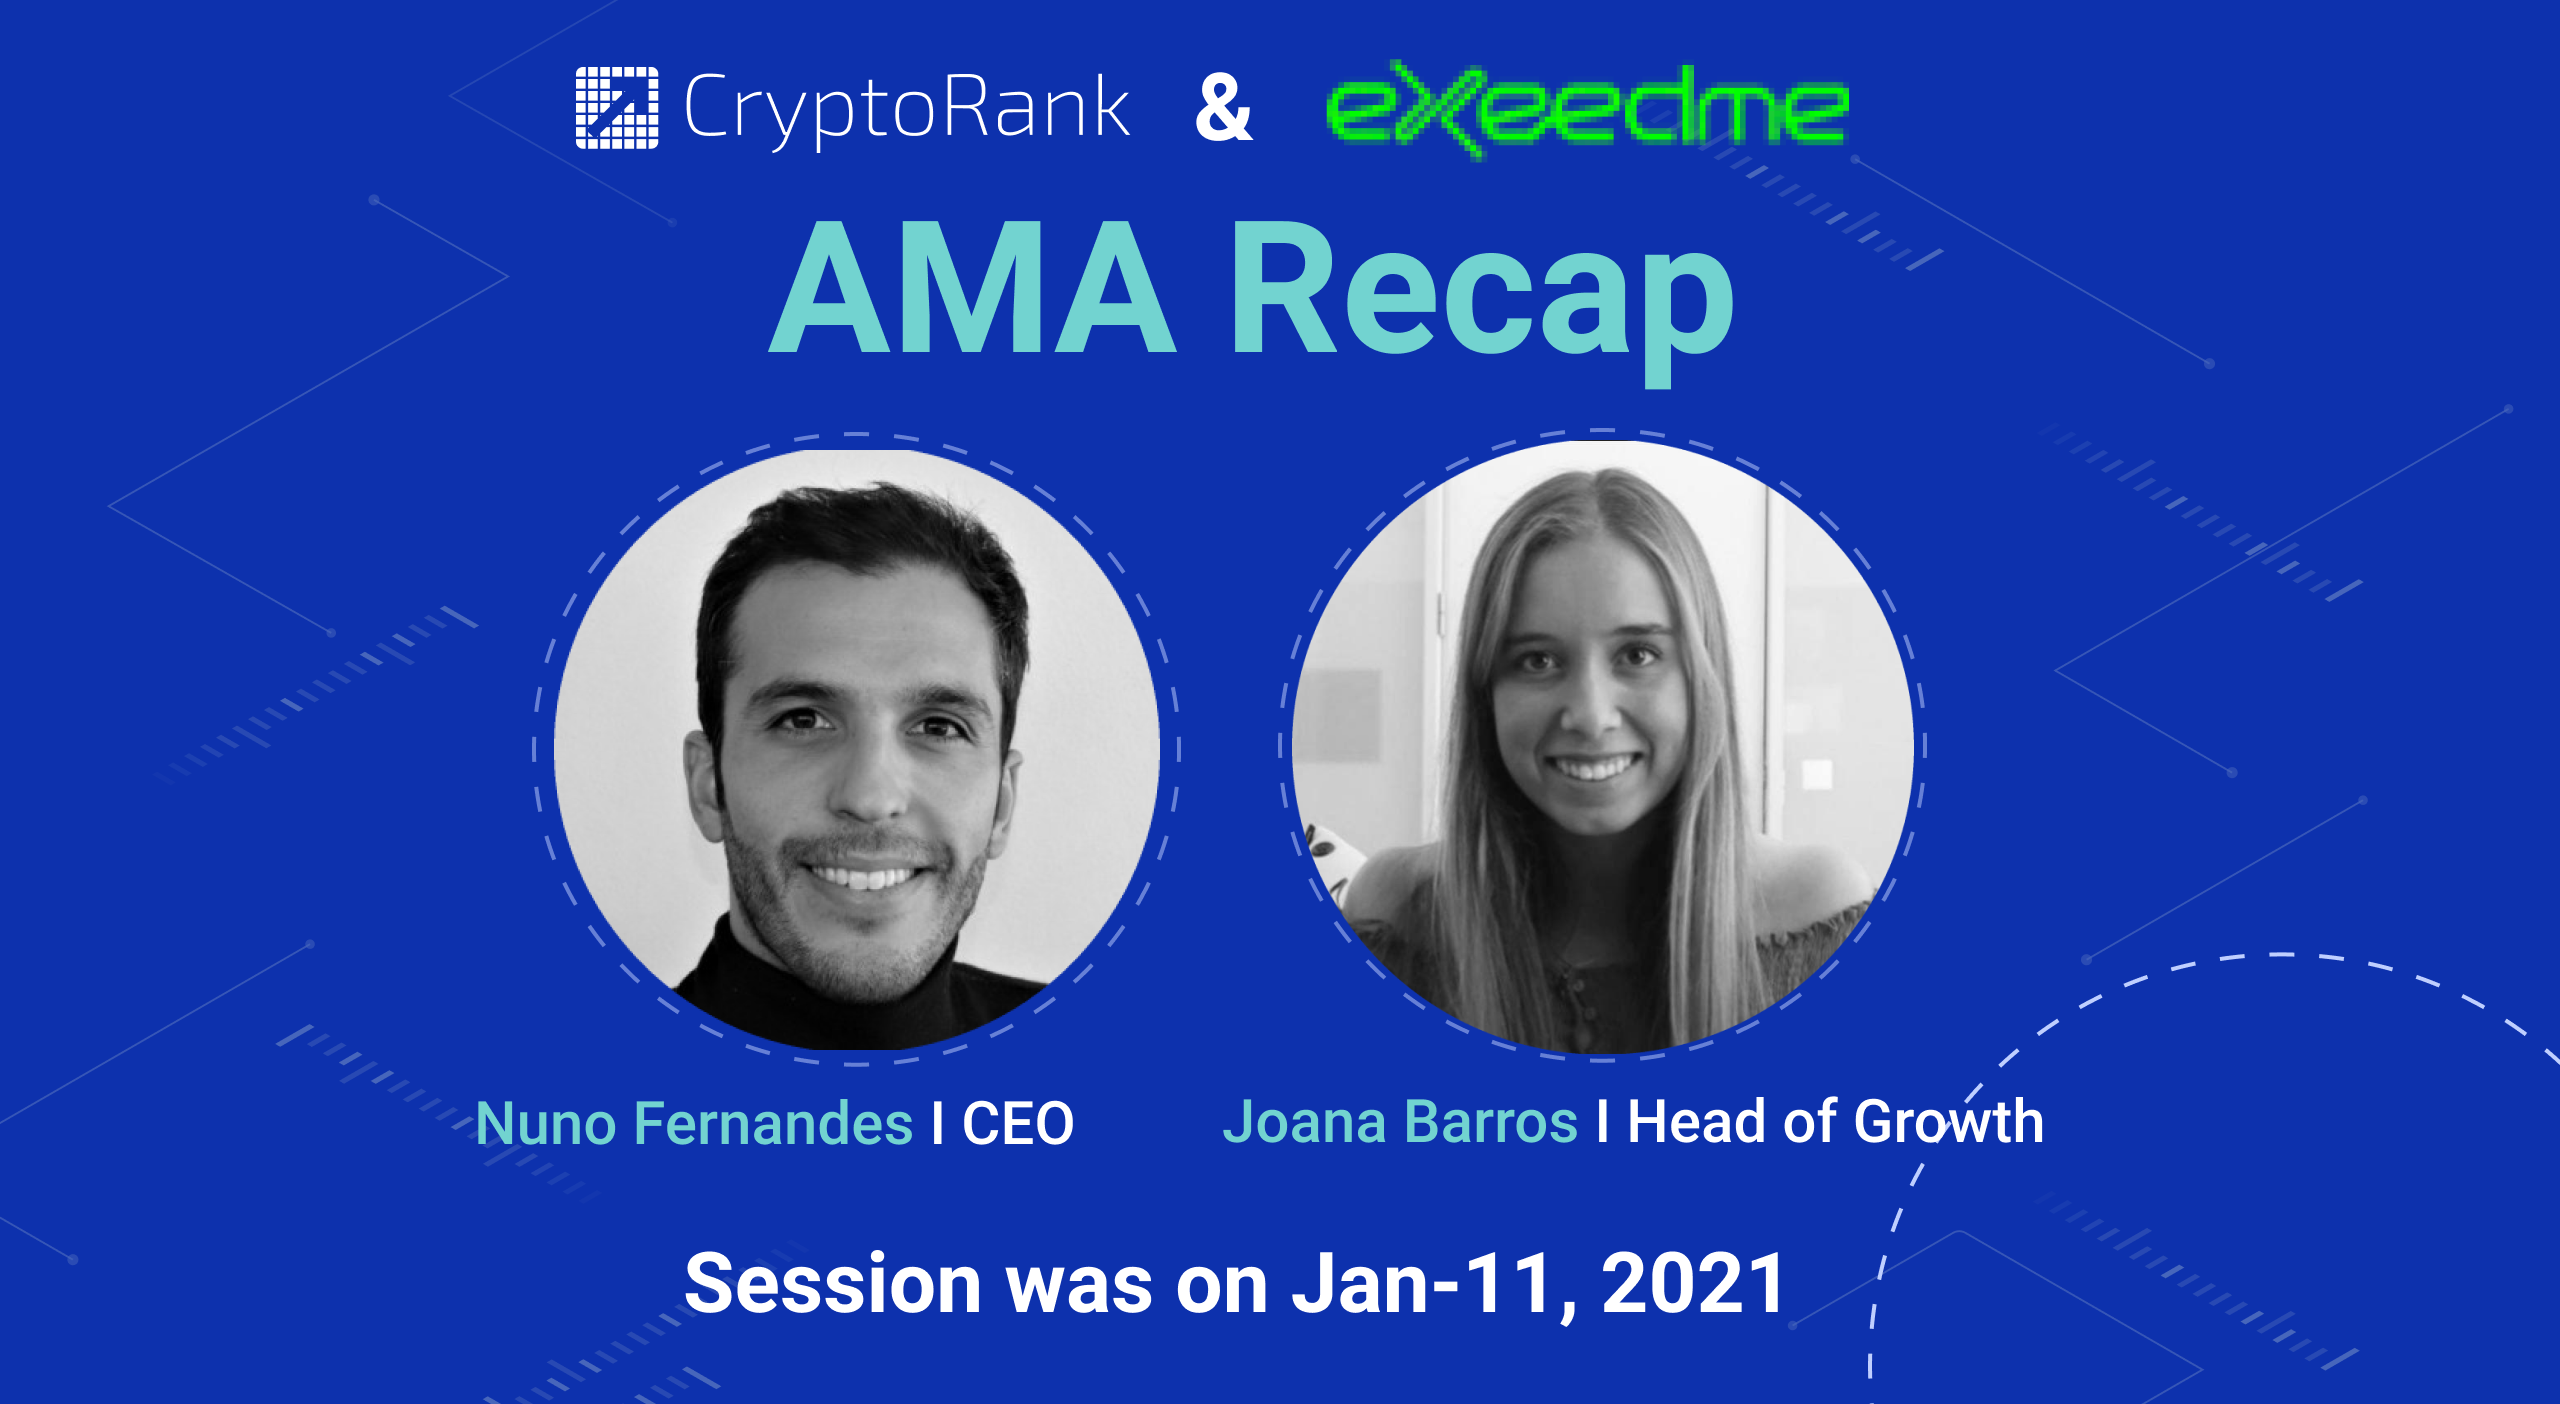 Exeedme AMA Recap - Cryptorank News